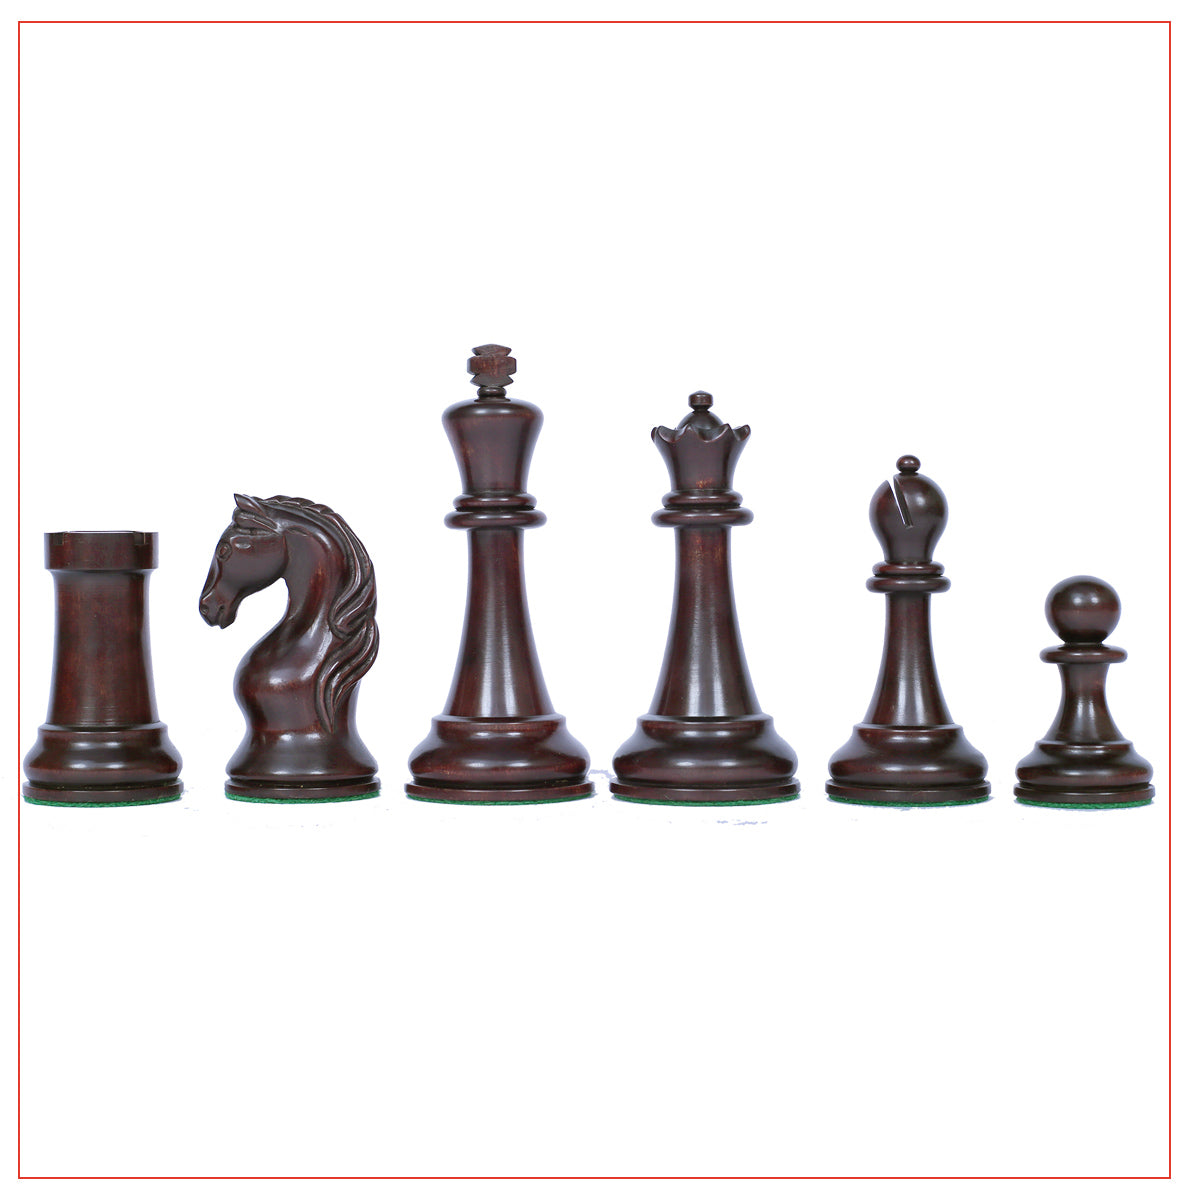 Piatigorsky 1865 Reproduction 4.5" Staunton Chess Set